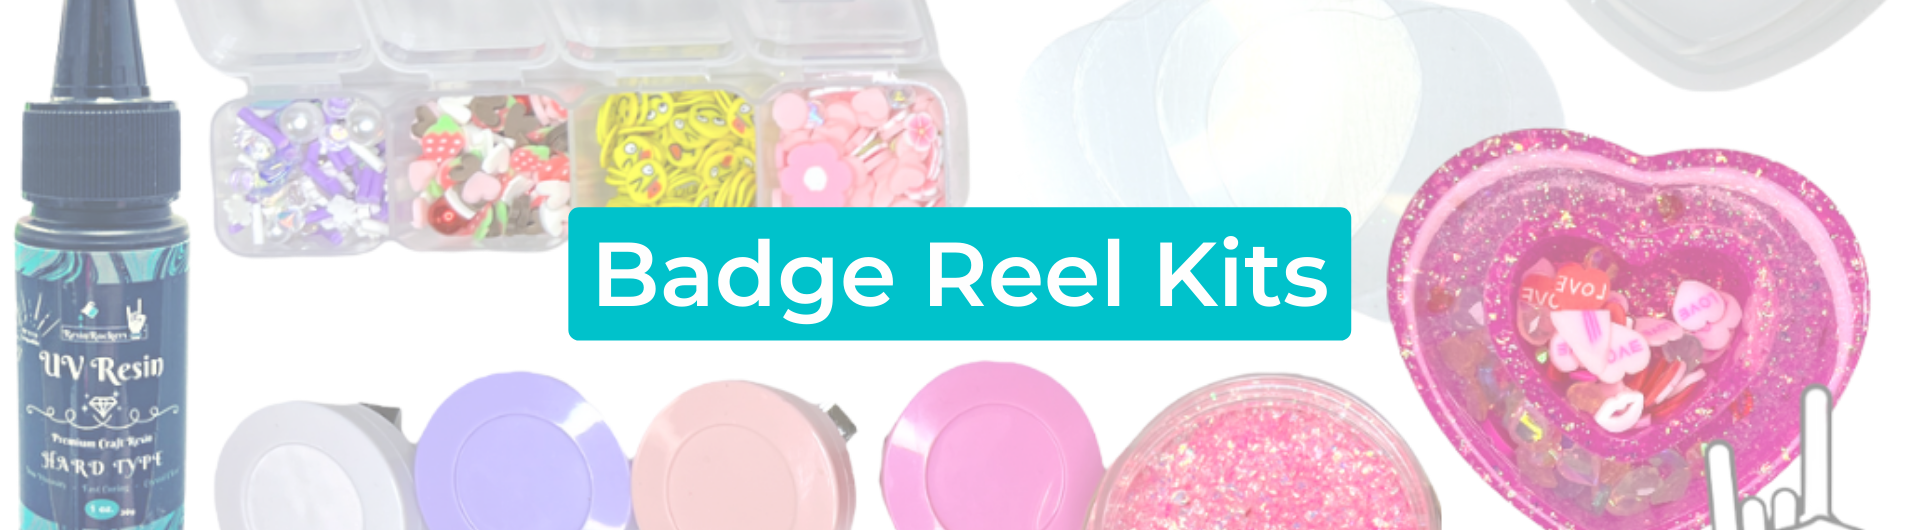 Badge Reel Kits